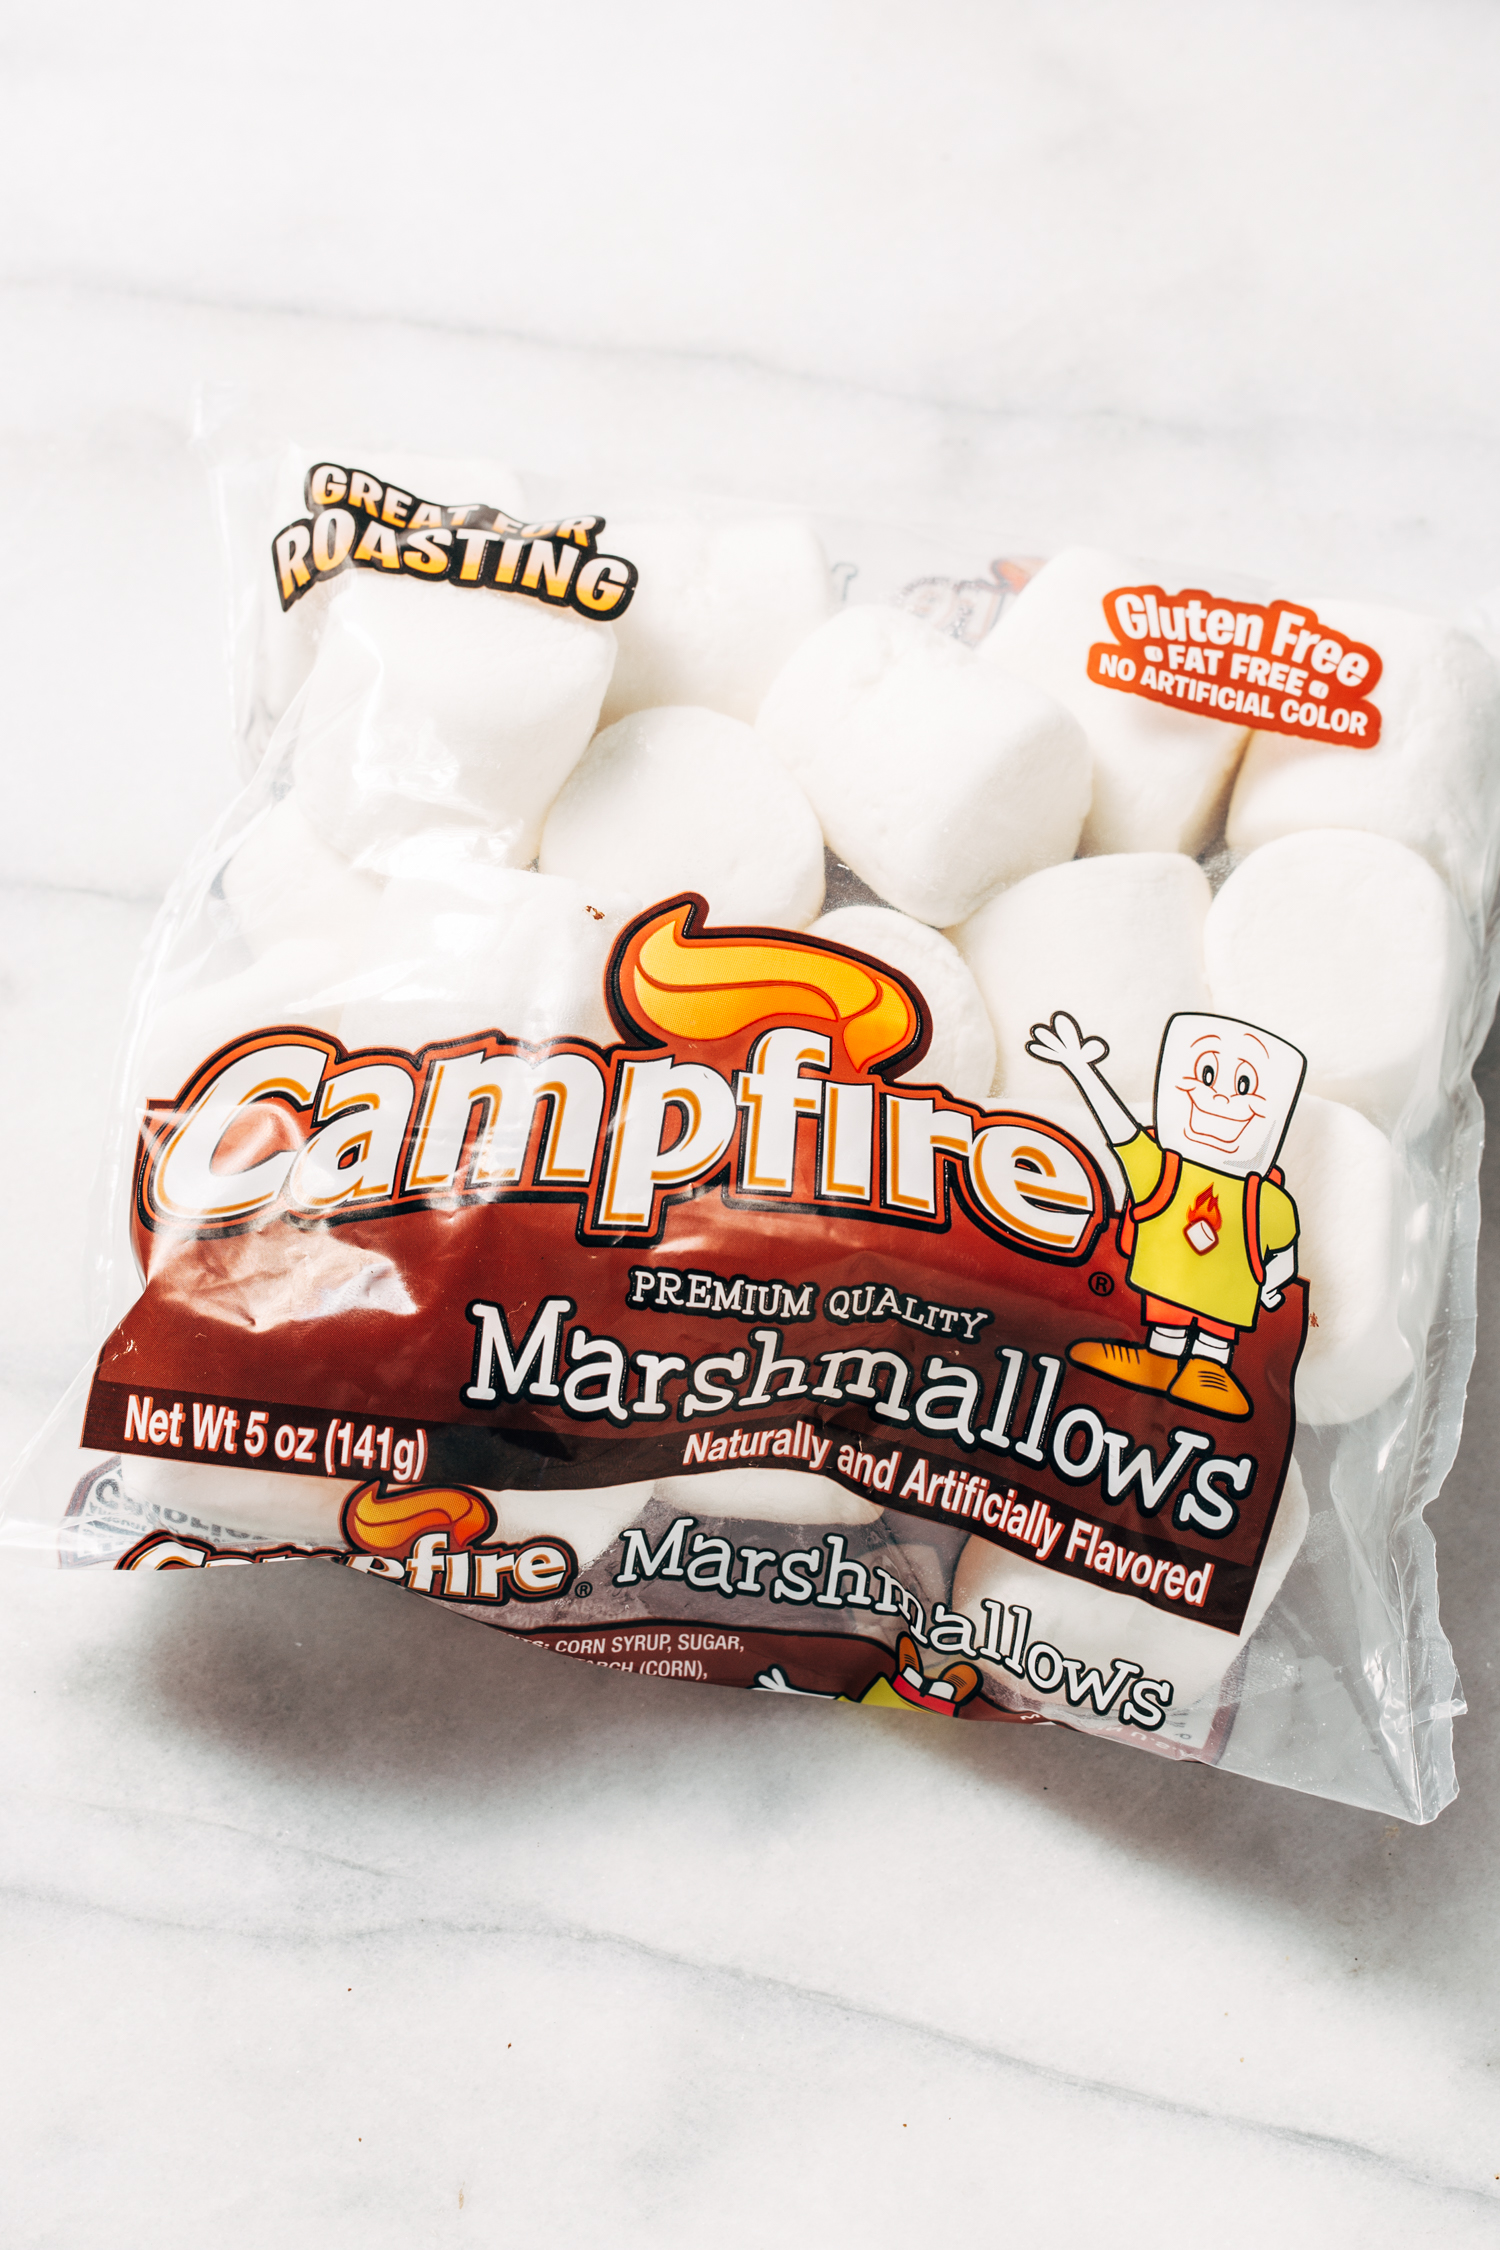 bag of campfire marshmallows